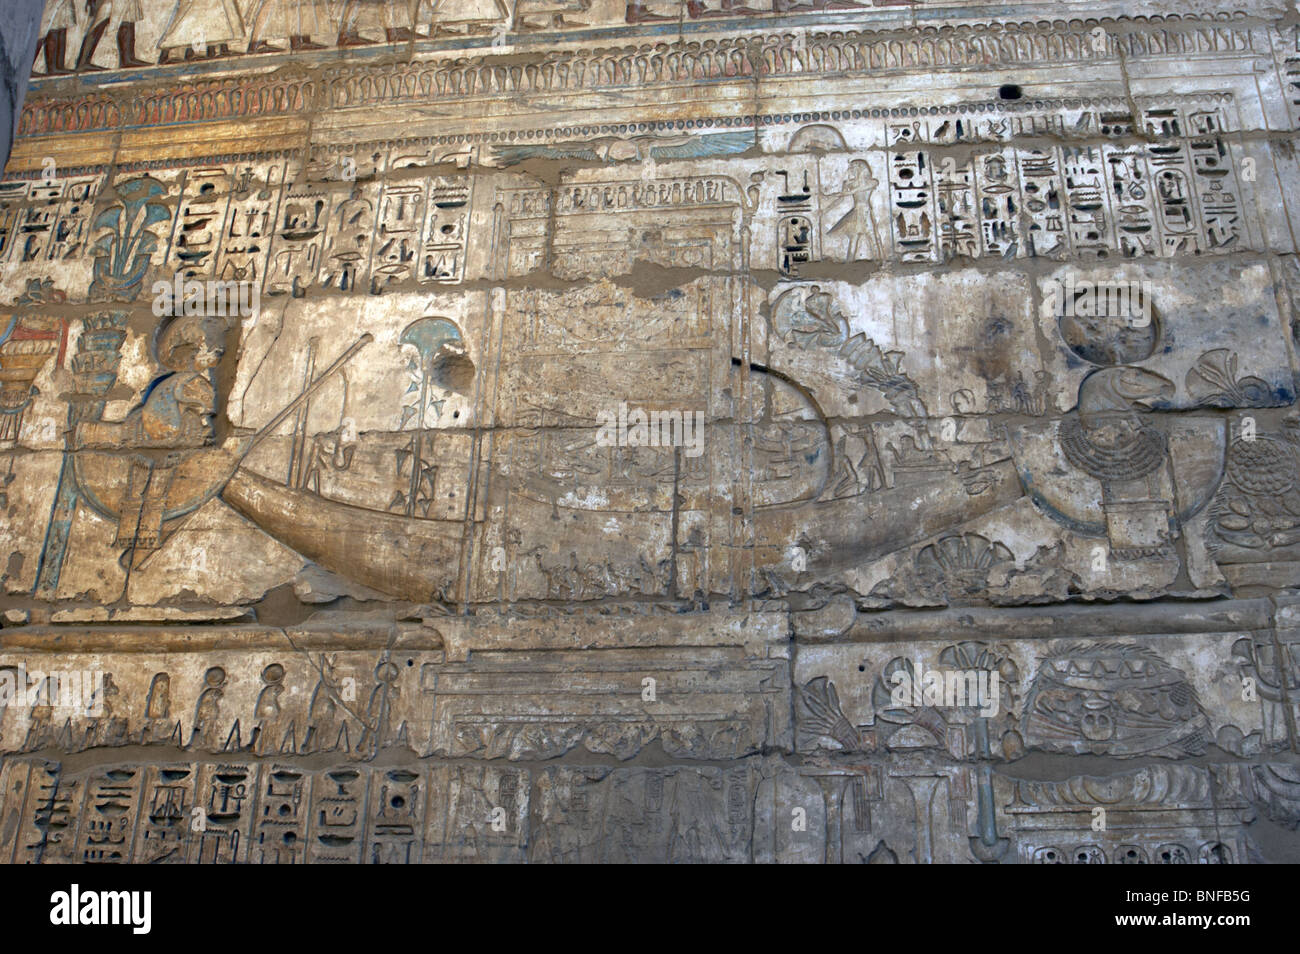 Temple of Ramses III. Sacred solar boat procession. Egypt. Stock Photo